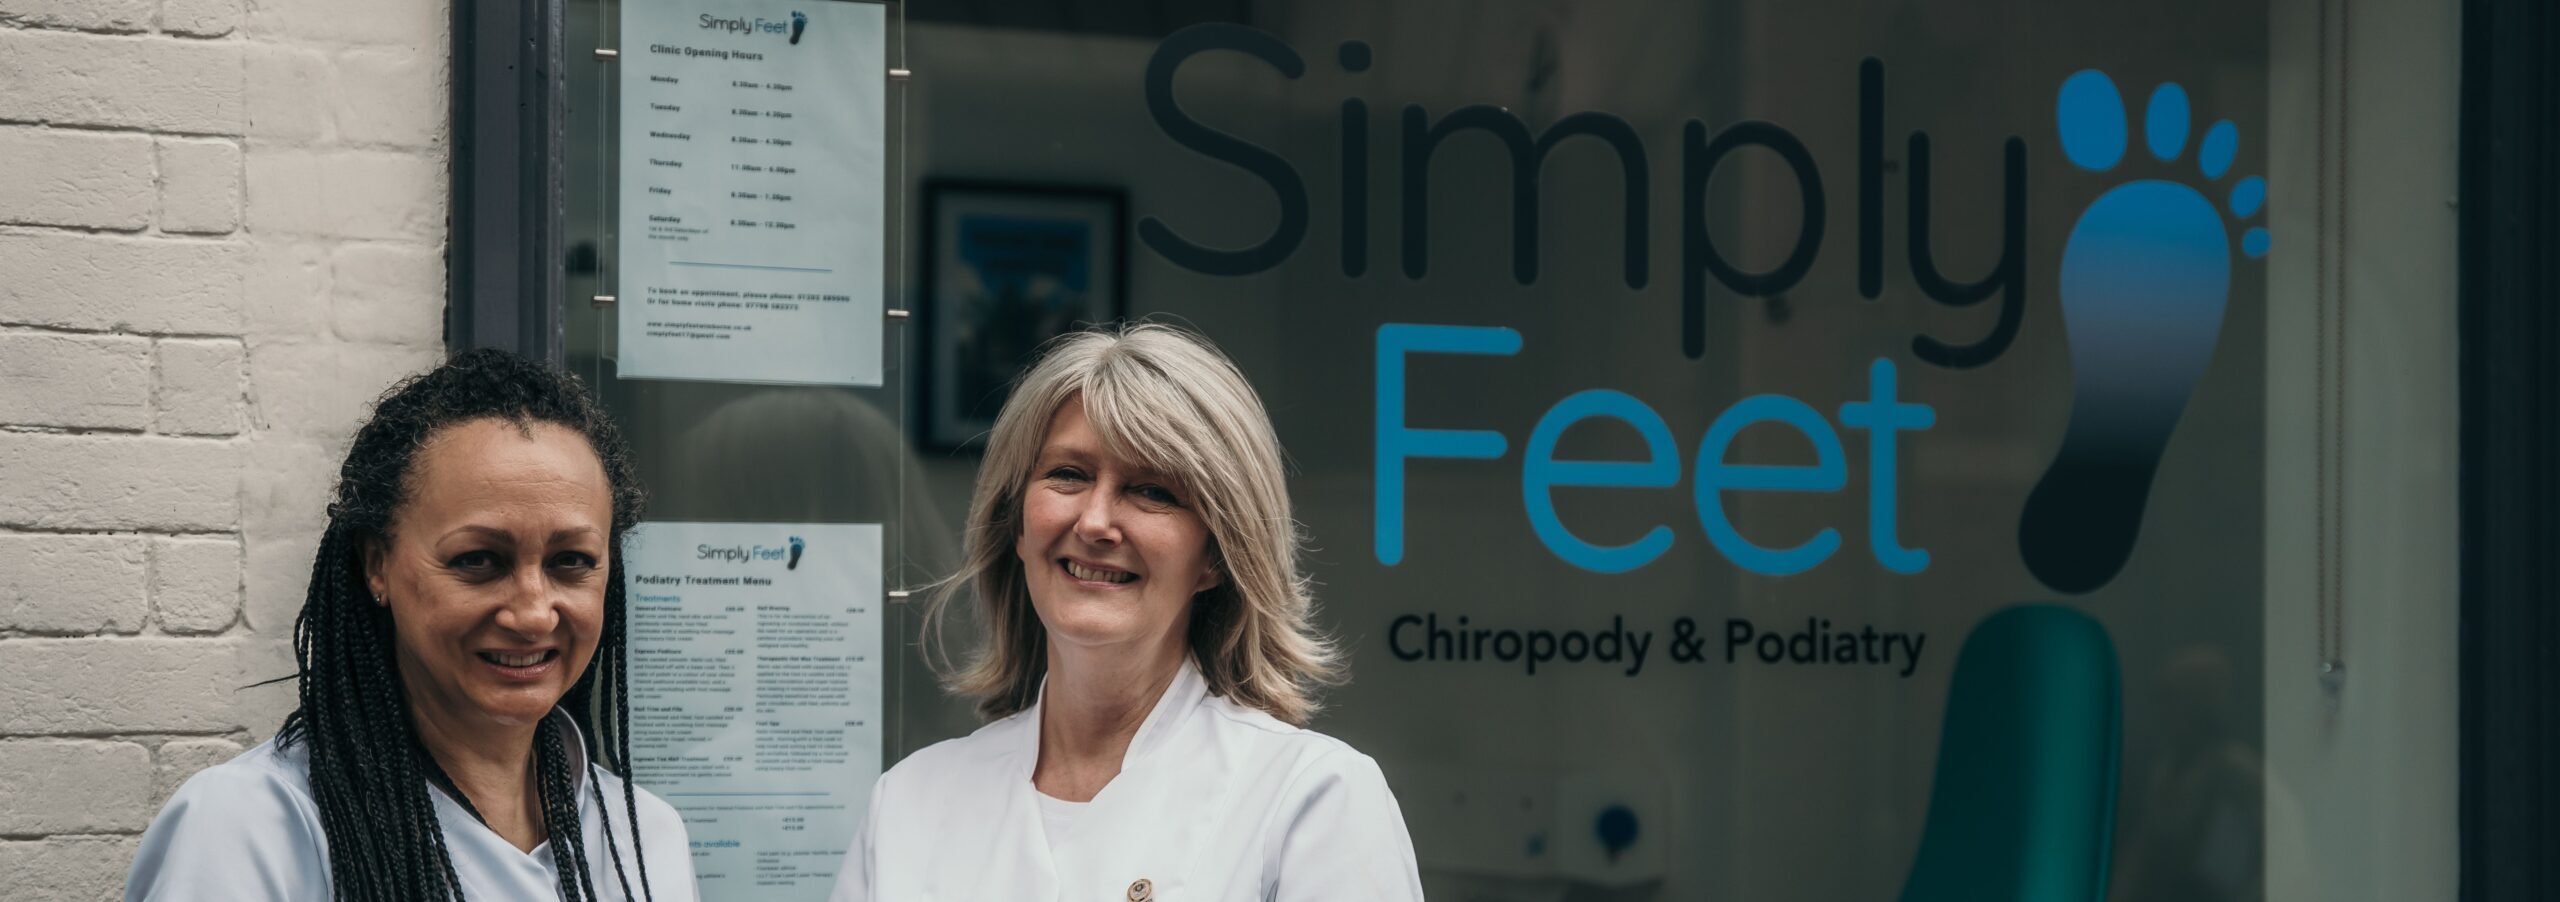 Angela Churchill and Jennifer Benn outside Simply Feet chiropody and podiatry clinic